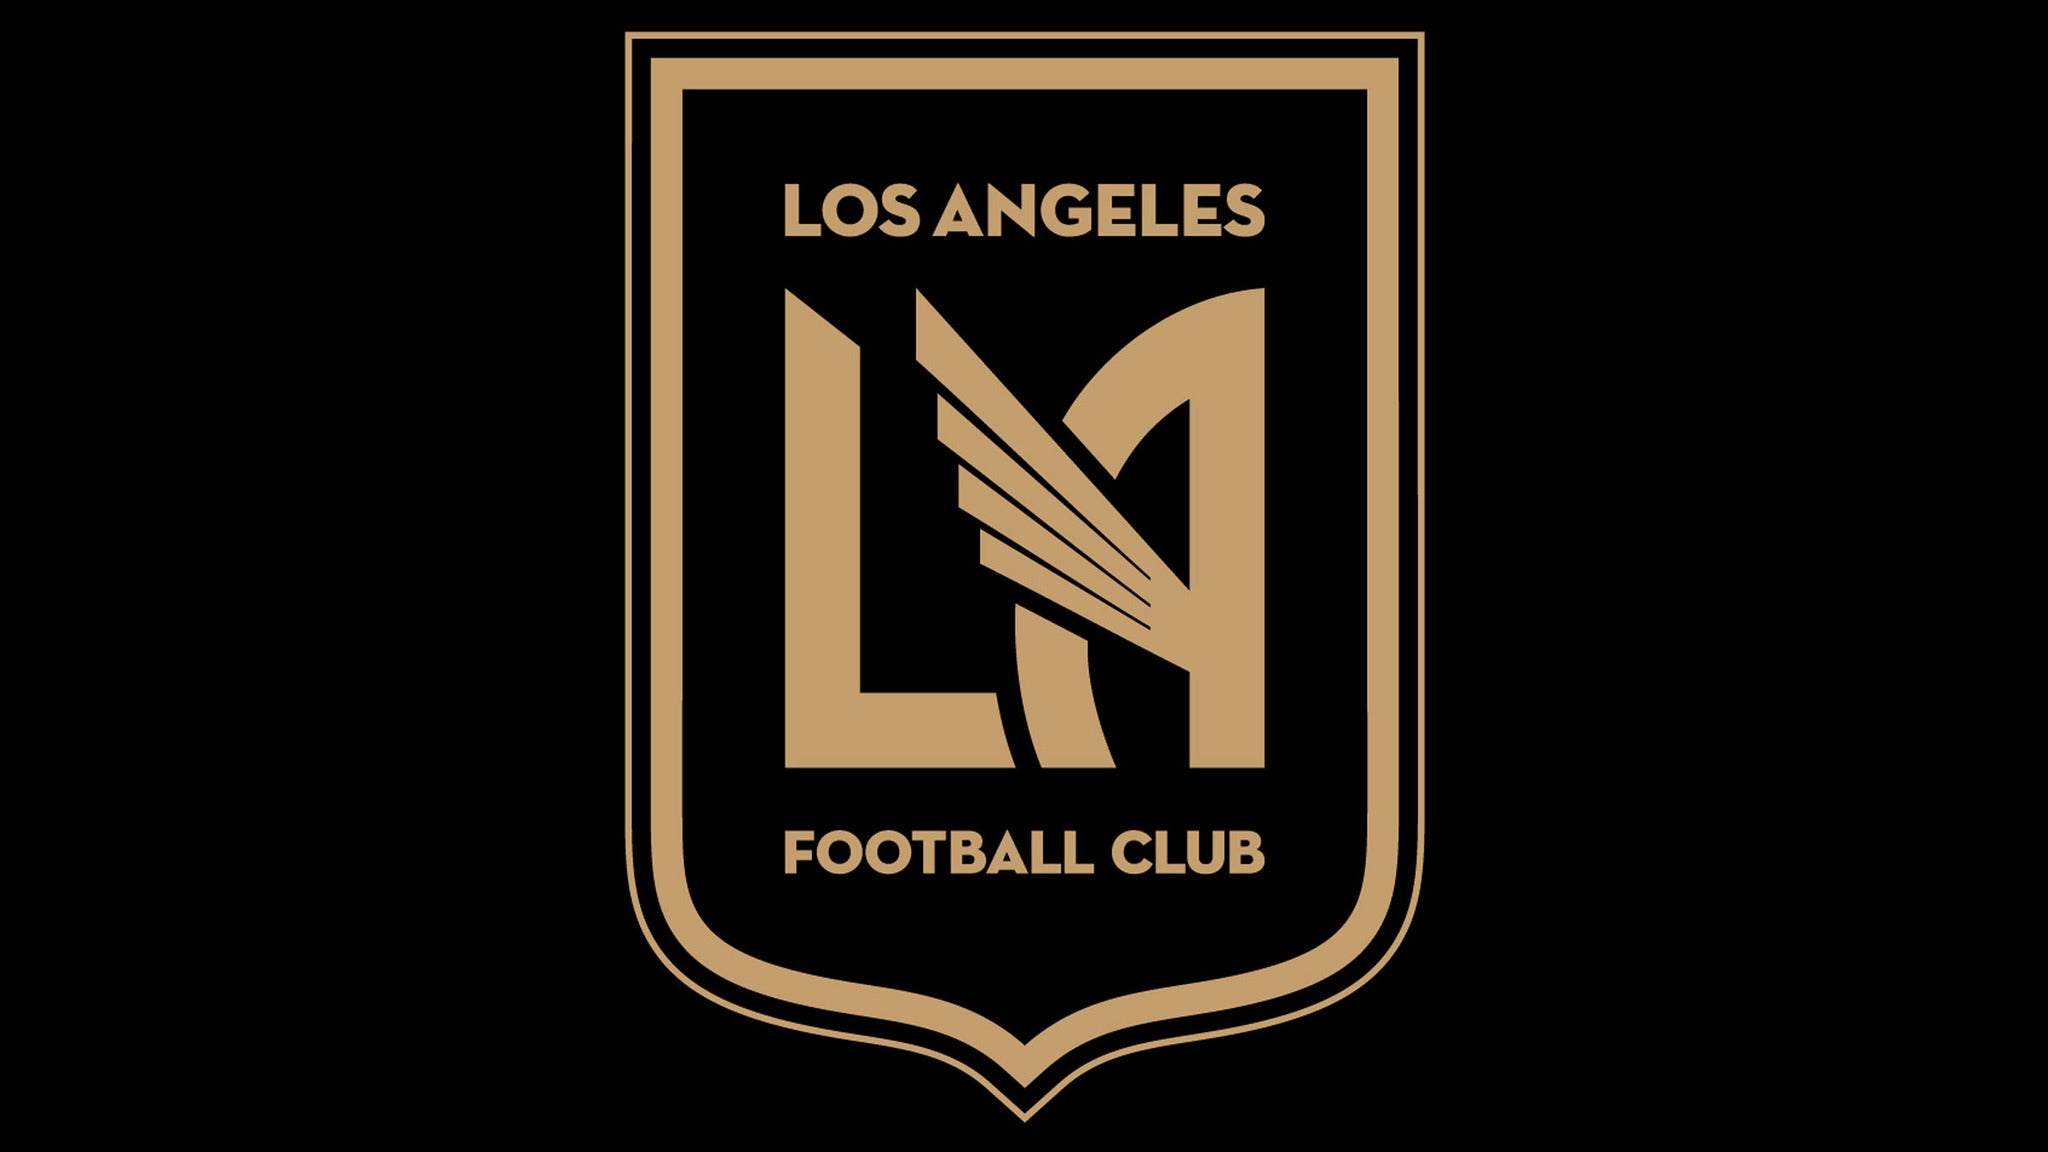 Main image for event titled Los Angeles Football Club vs. Houston Dynamo